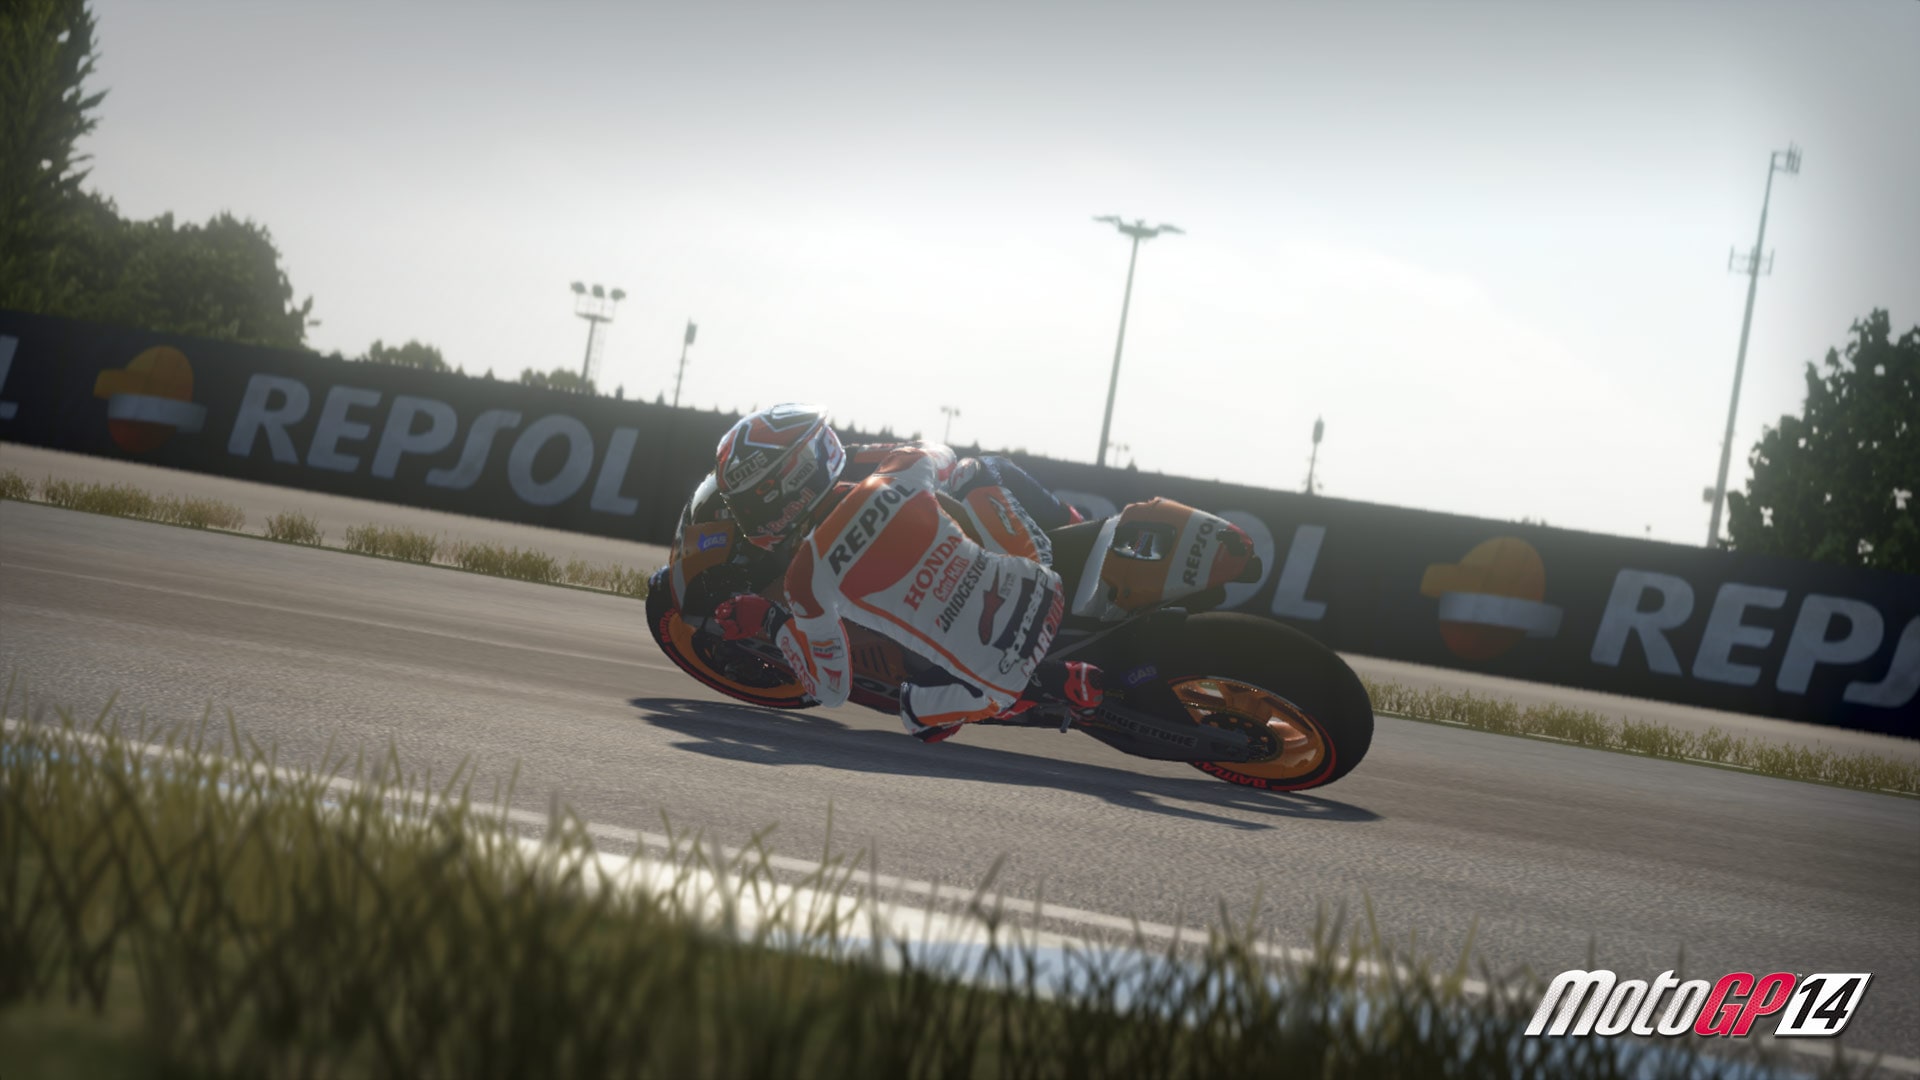 Jogo PS4 Moto GP 14